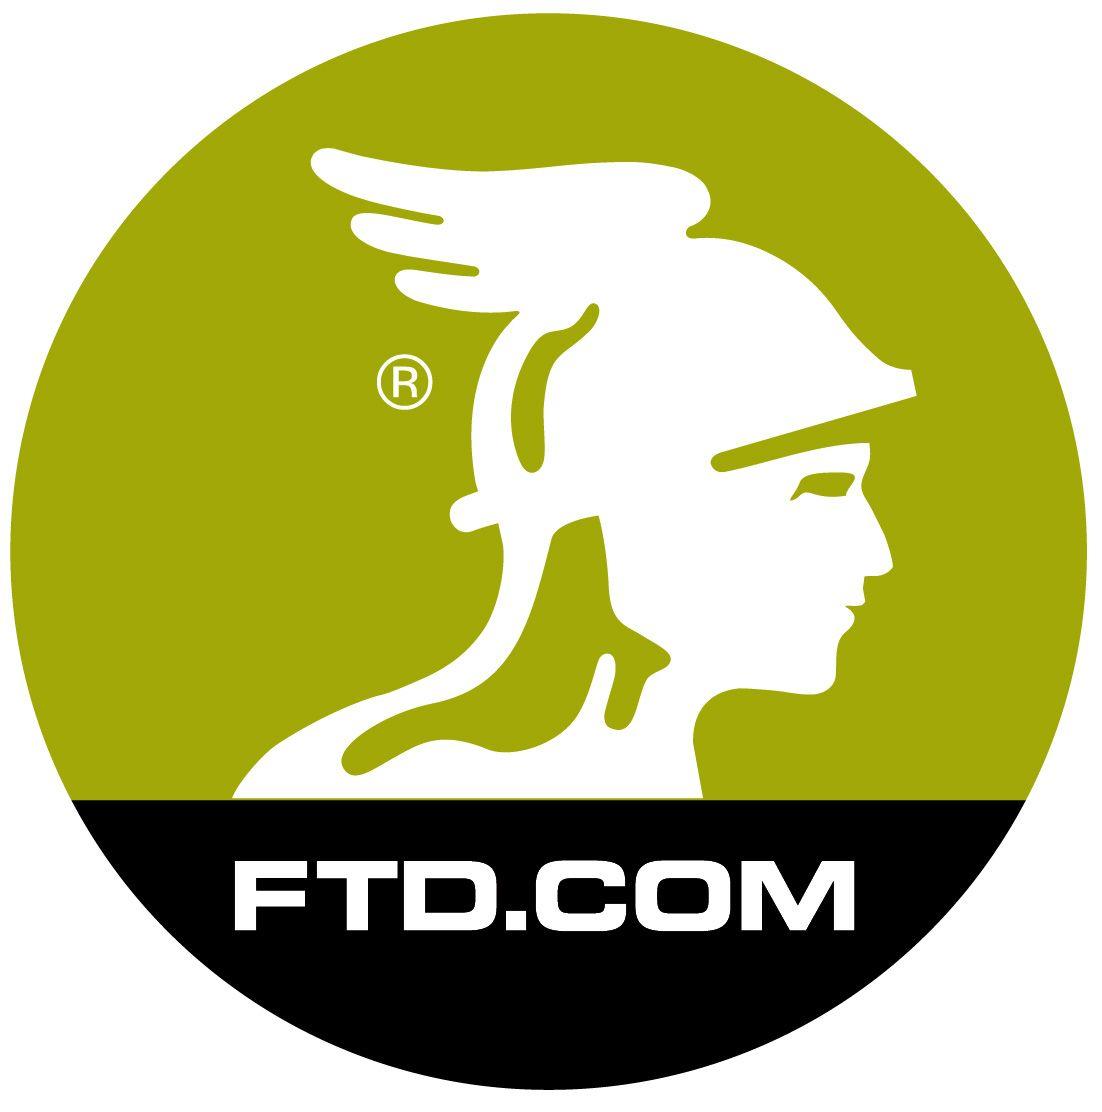 FTD.com Logo - fTD logo: | Mythology allusions (for school) | Logos, Ferrari logo ...